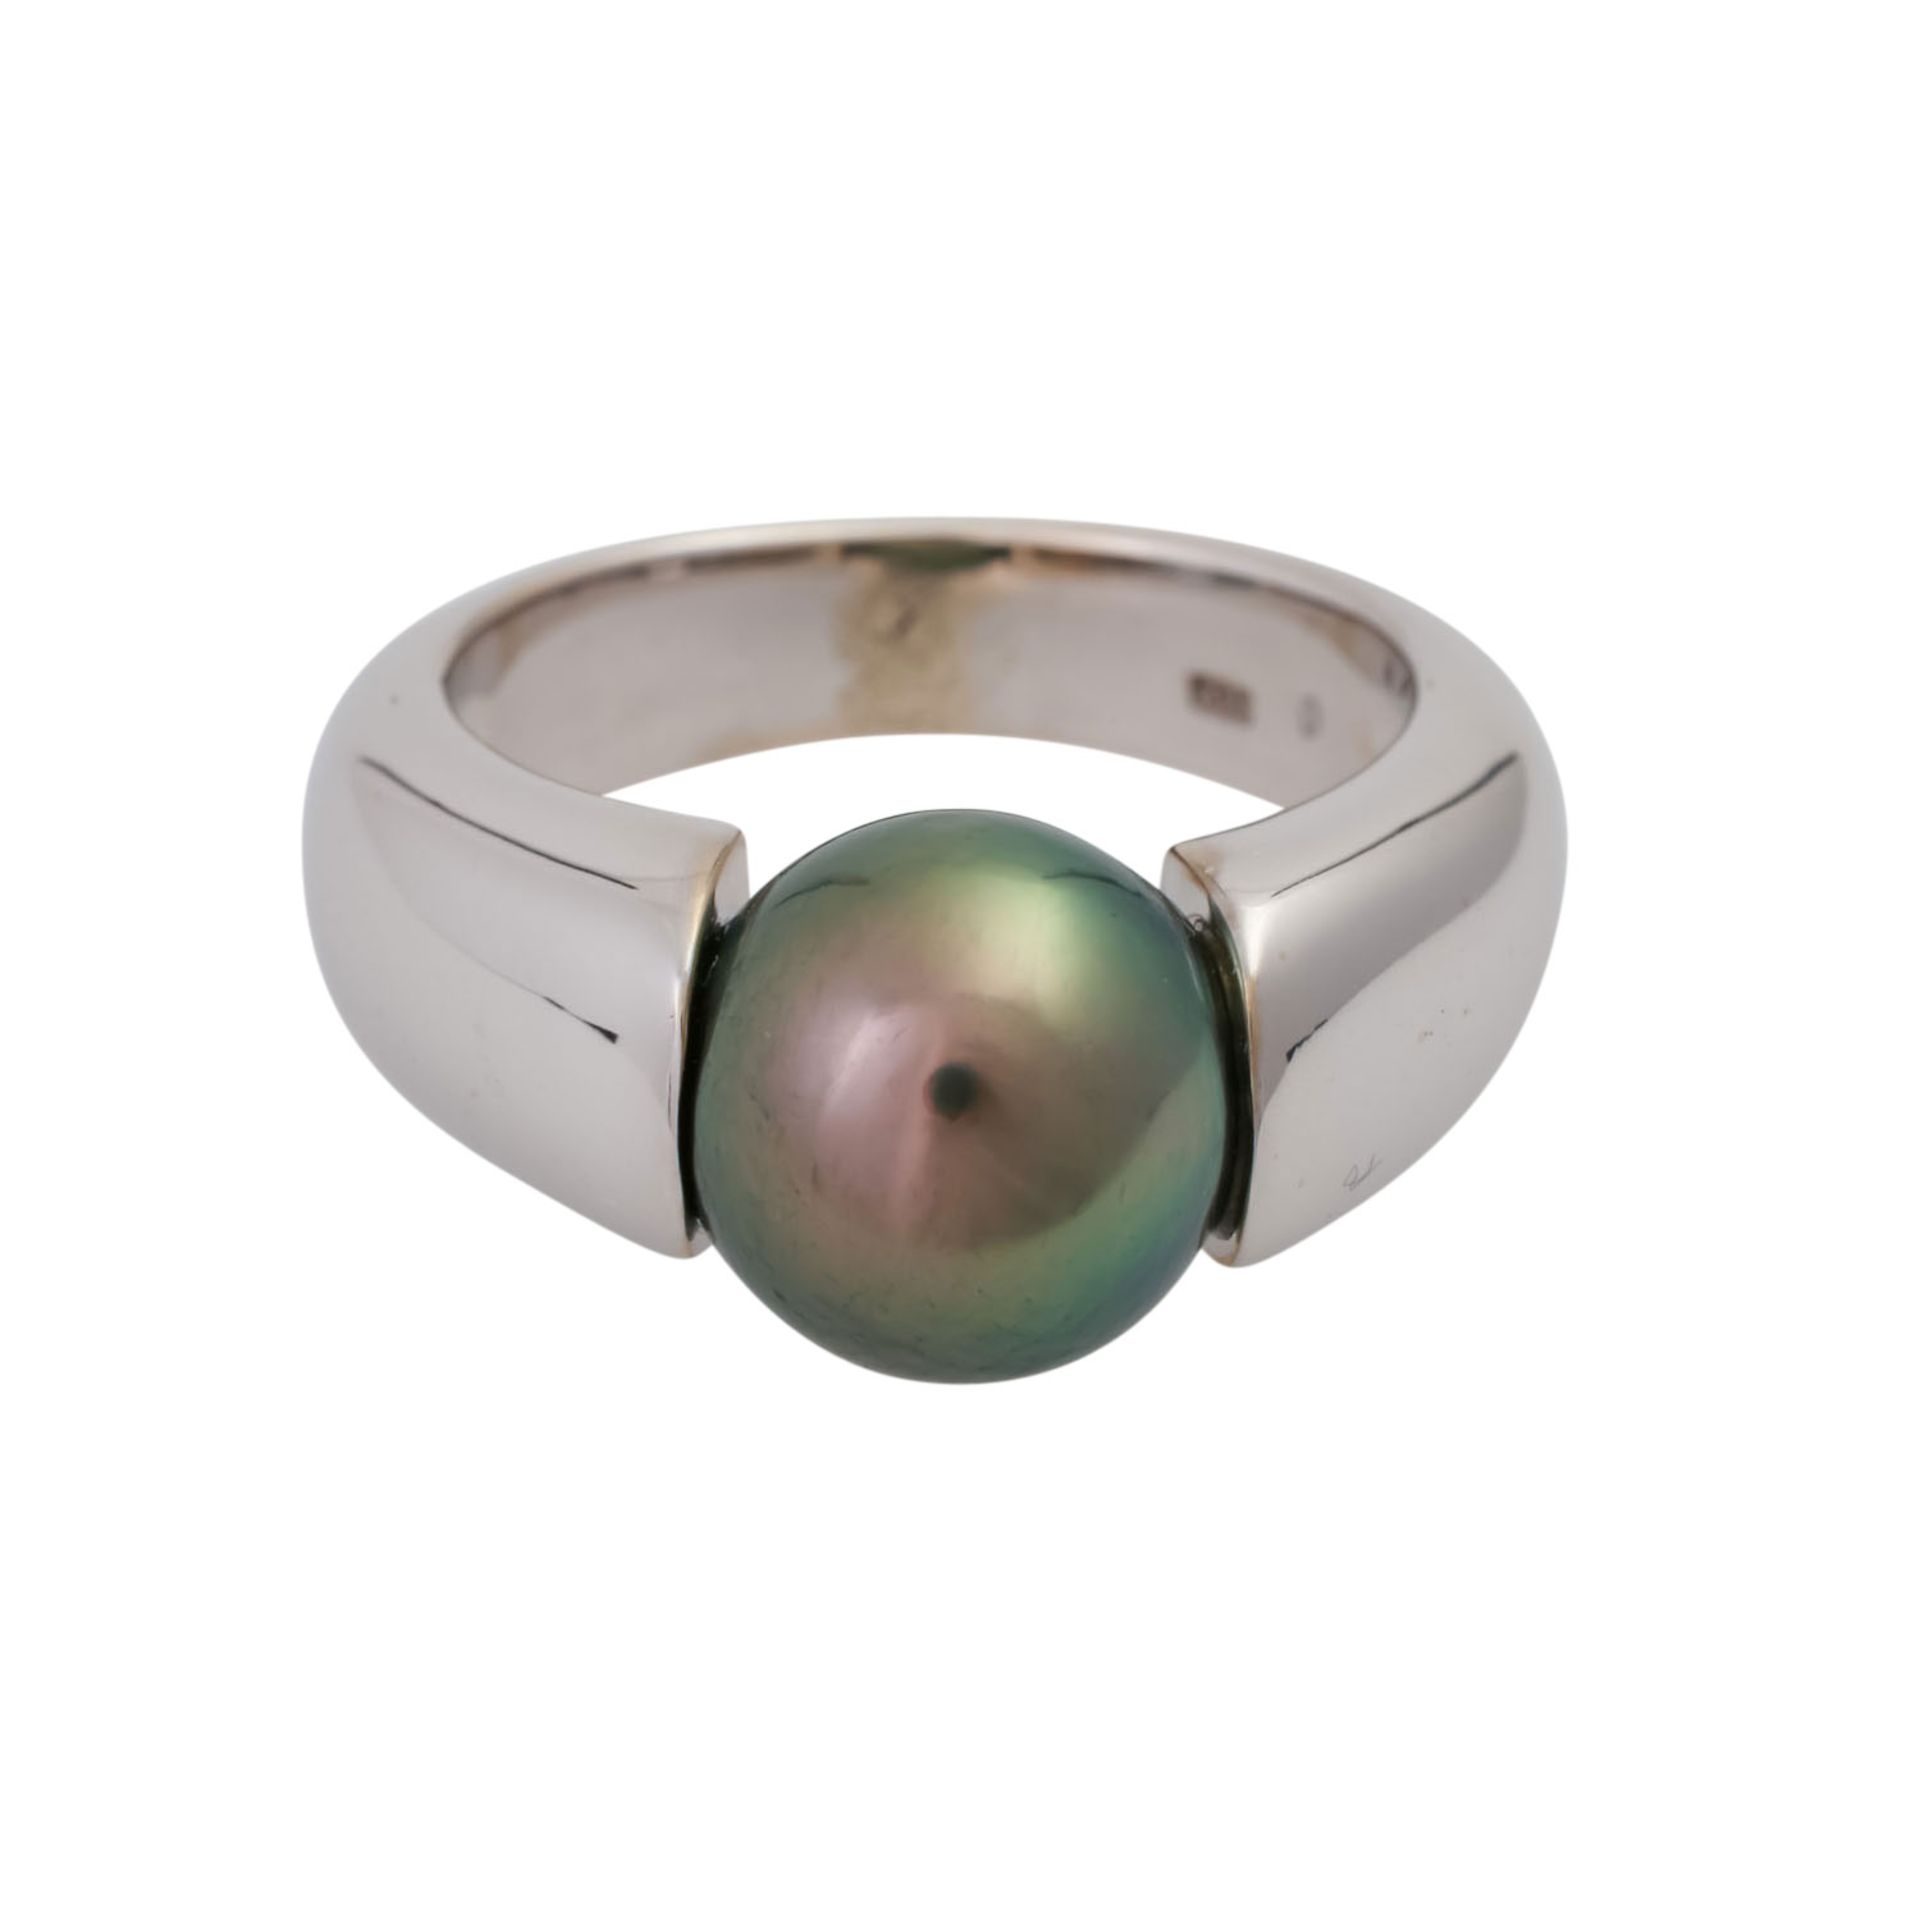 Ring mit Tahiti Zuchtperle, ca. 11 mm, grau-grünmit rosa Oberton, schöner Lüster, WG 14K, RW 57,